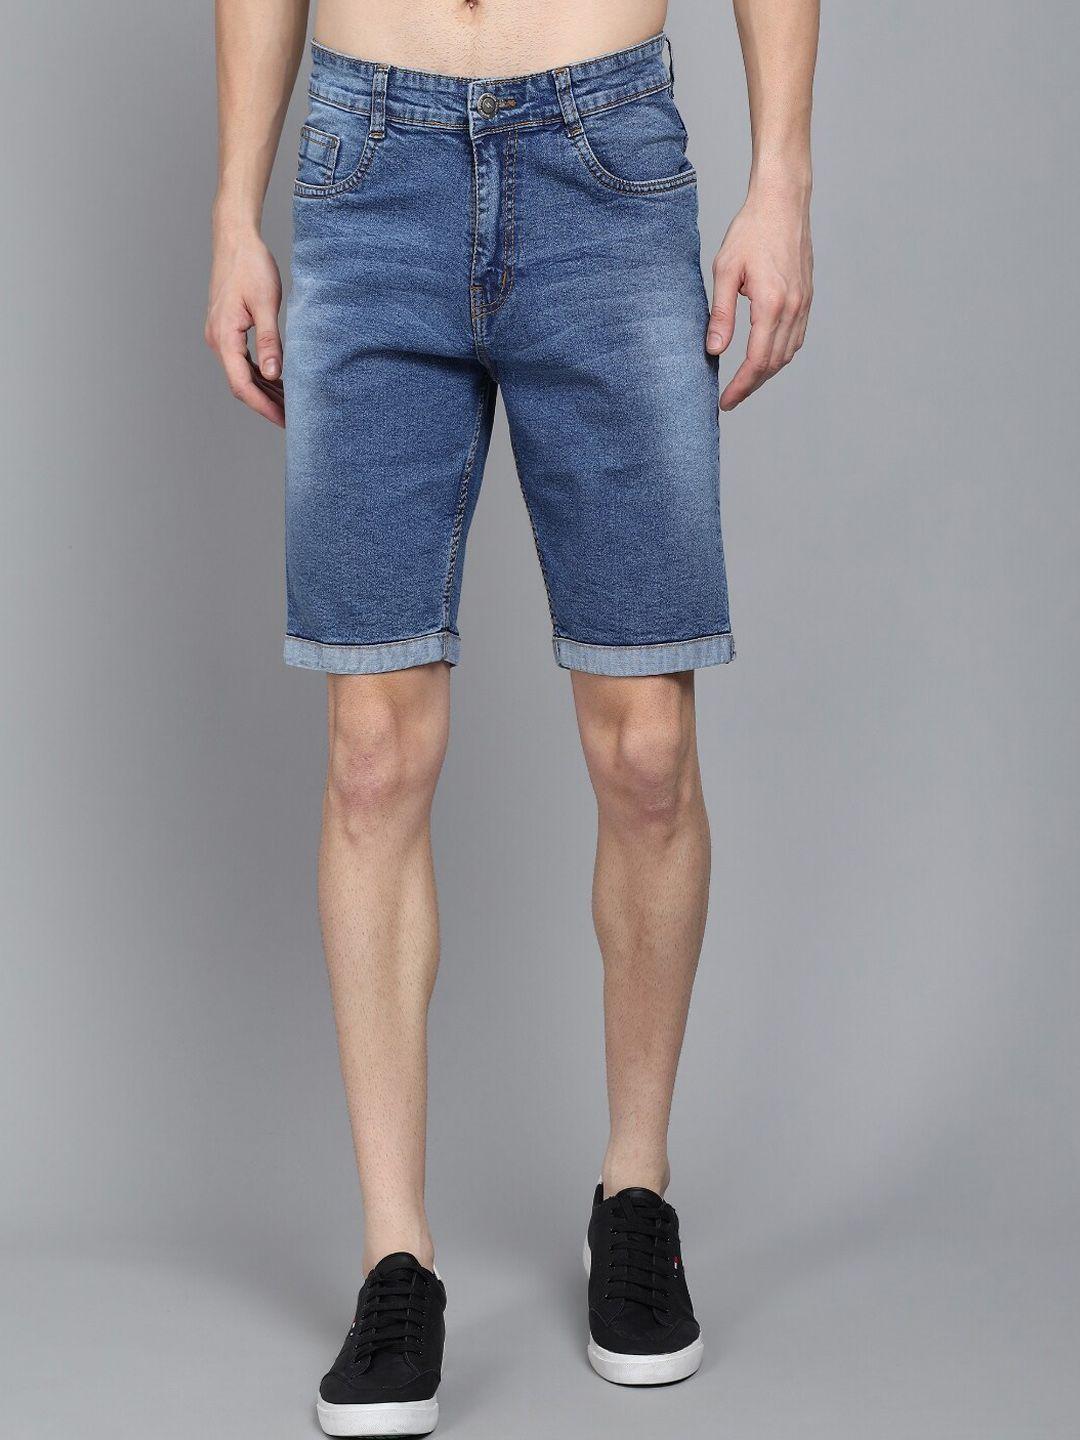 studio nexx men blue washed denim denim shorts technology